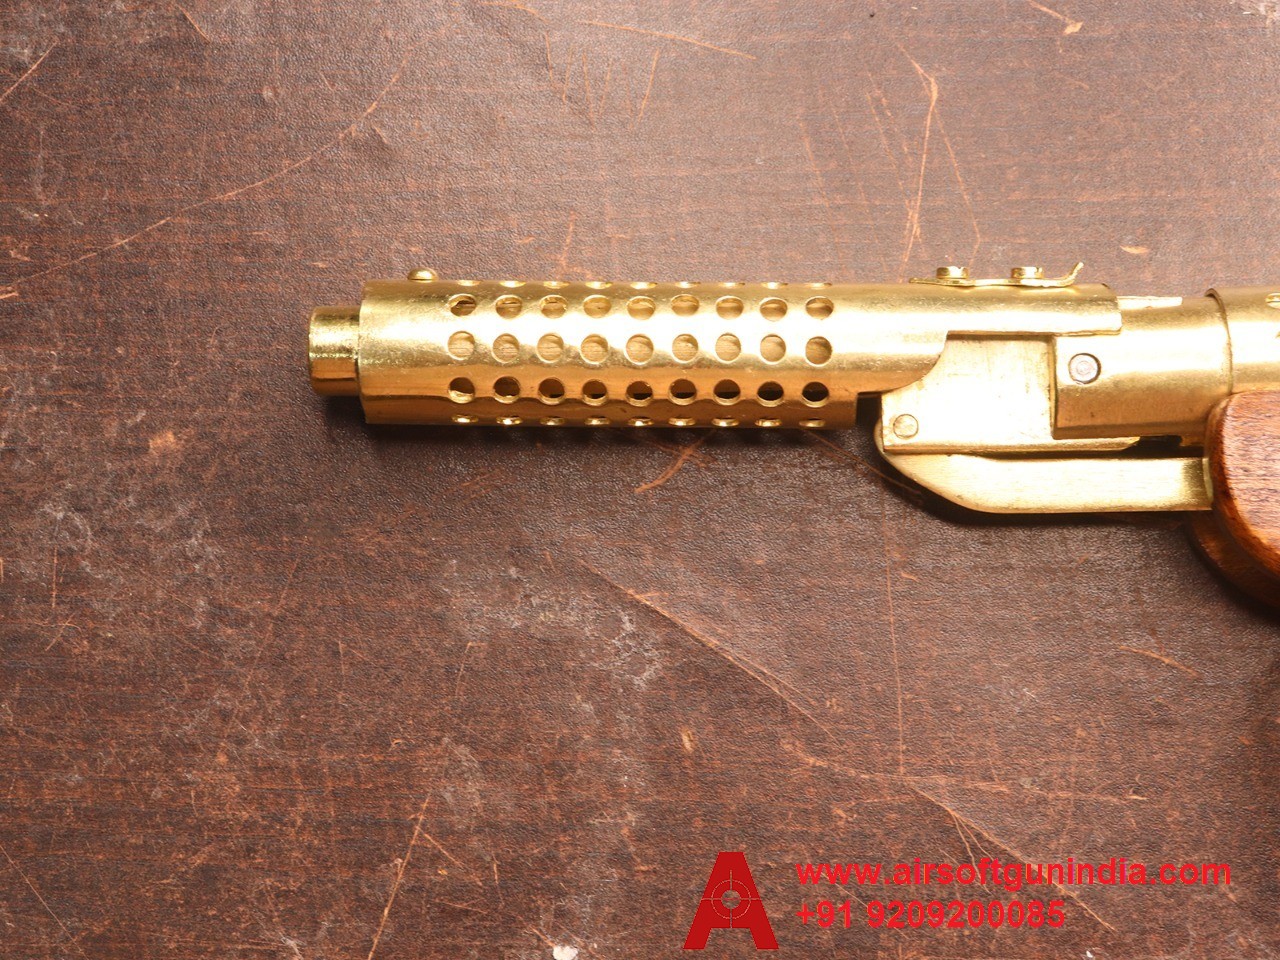 Bullet Mark 2 Gold Single-Shot .177 Caliber / 4.5 Mm Indian Air Pistol By Airsoft Gun India